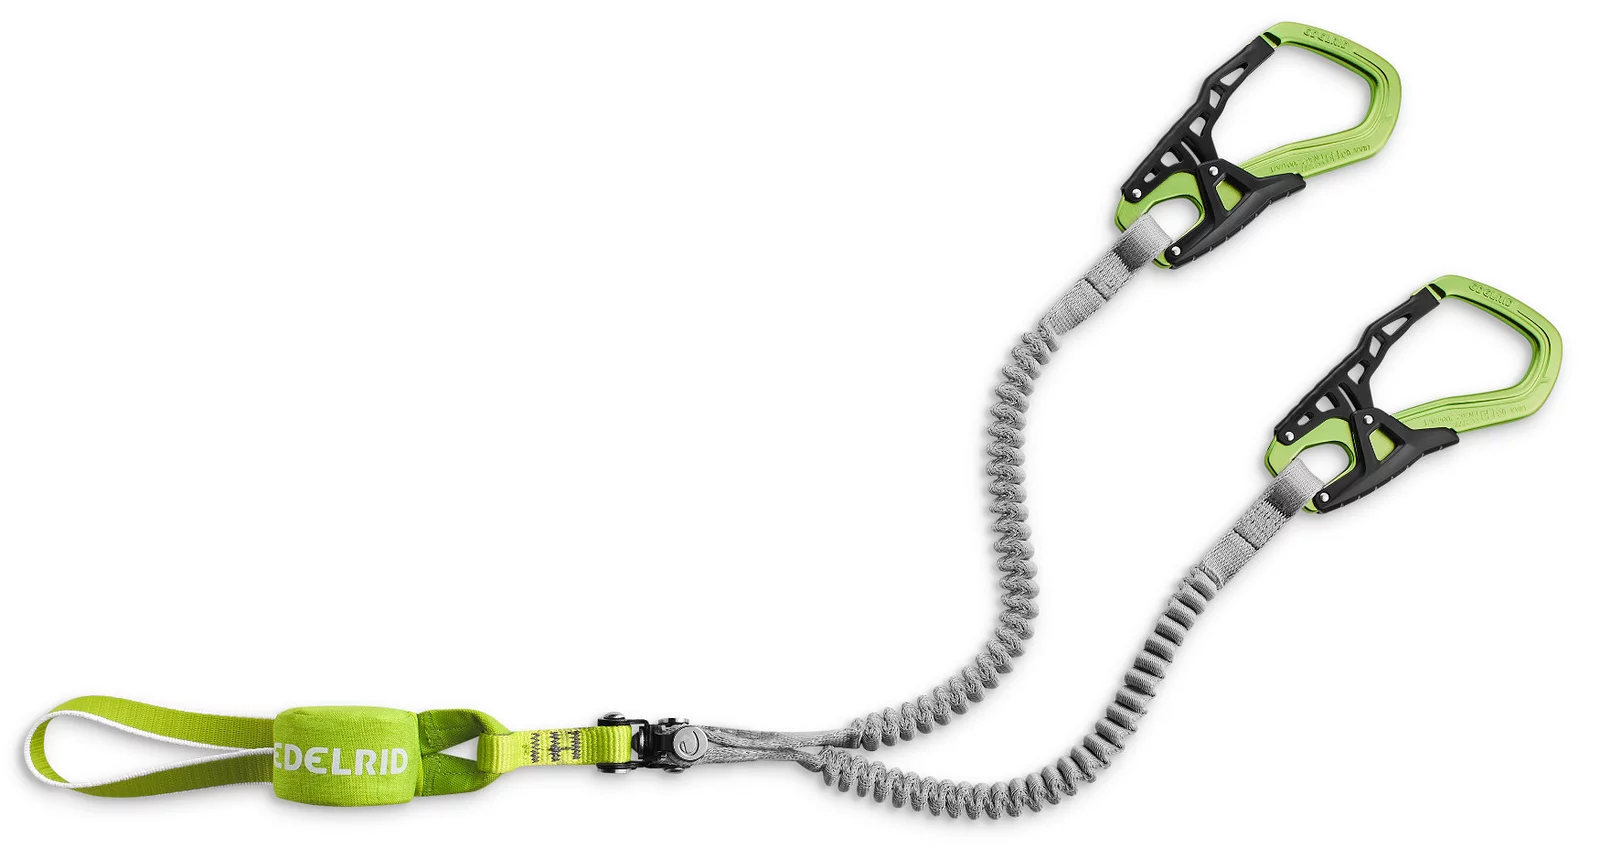 Edelrid Klettersteigset Cable Comfort 6.0 - Made in Germany